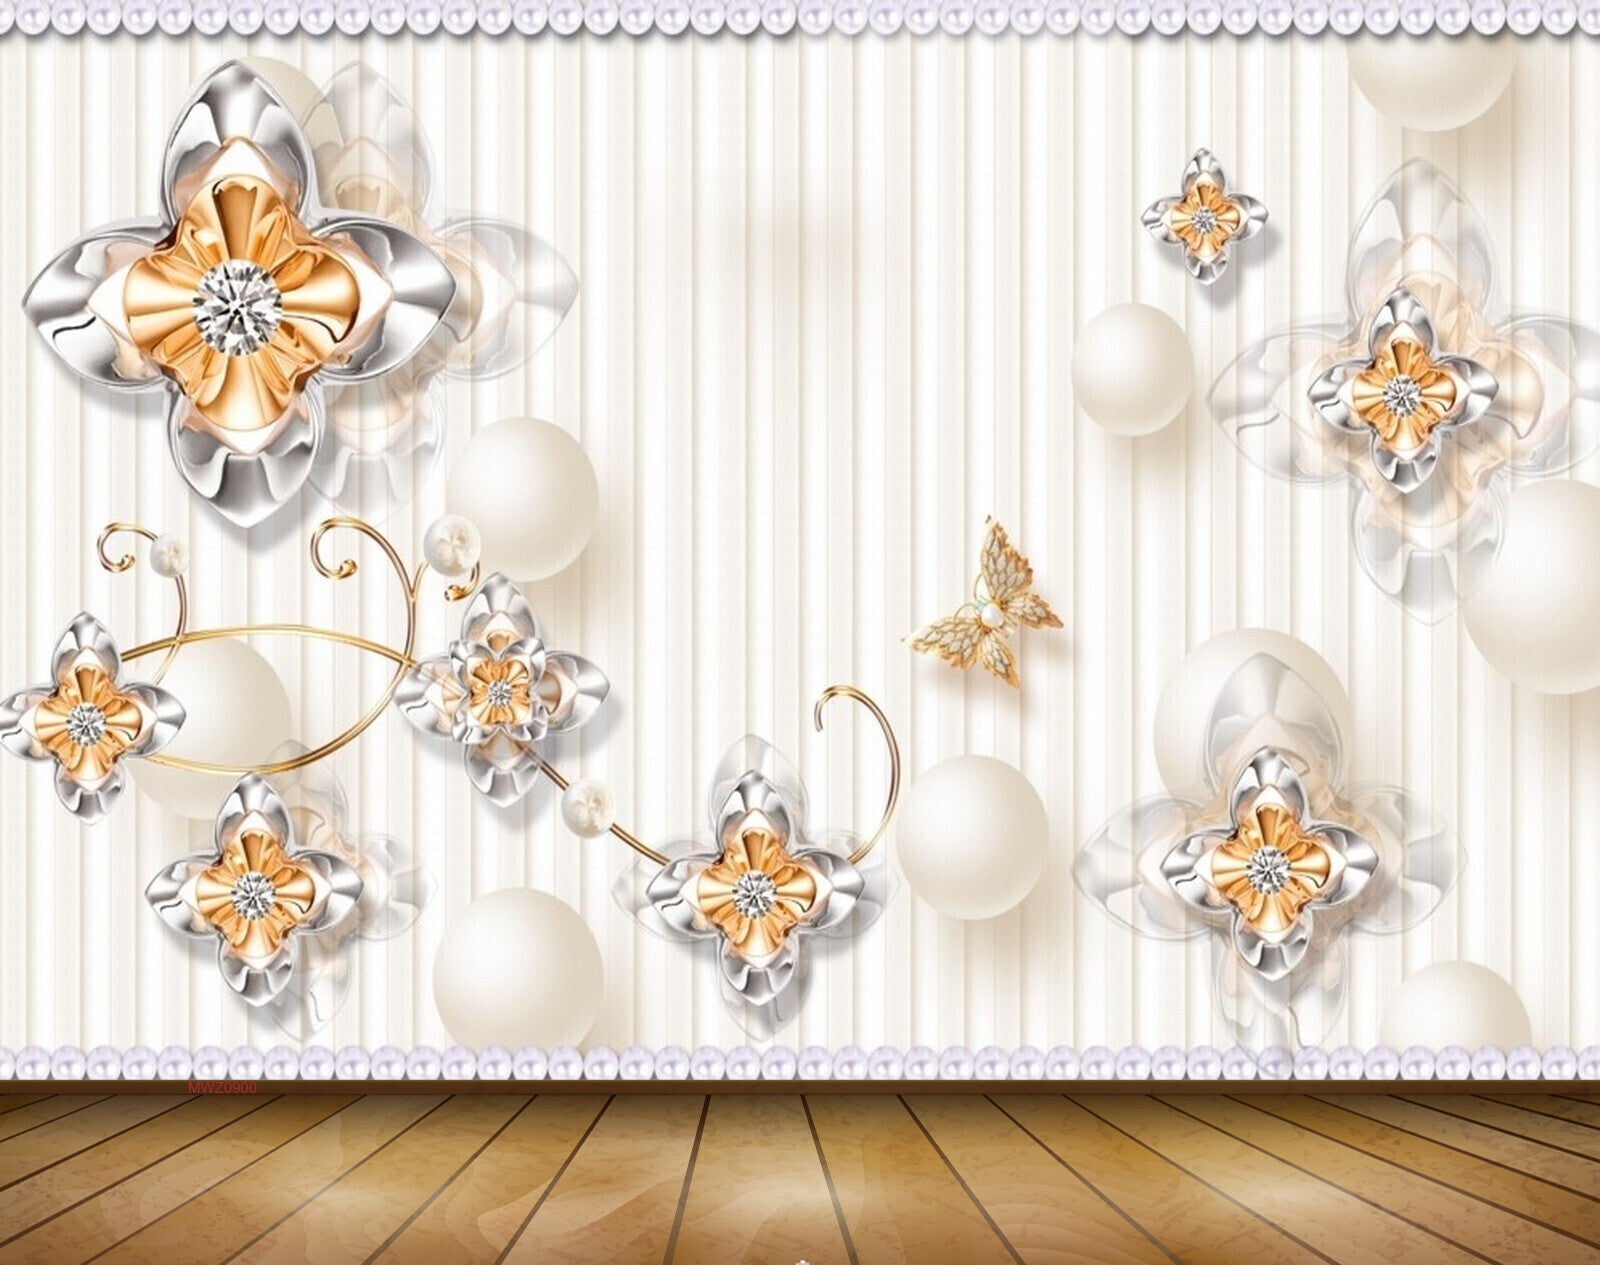 Avikalp MWZ0900 White Orange Flowers Butterflies 3D HD Wallpaper